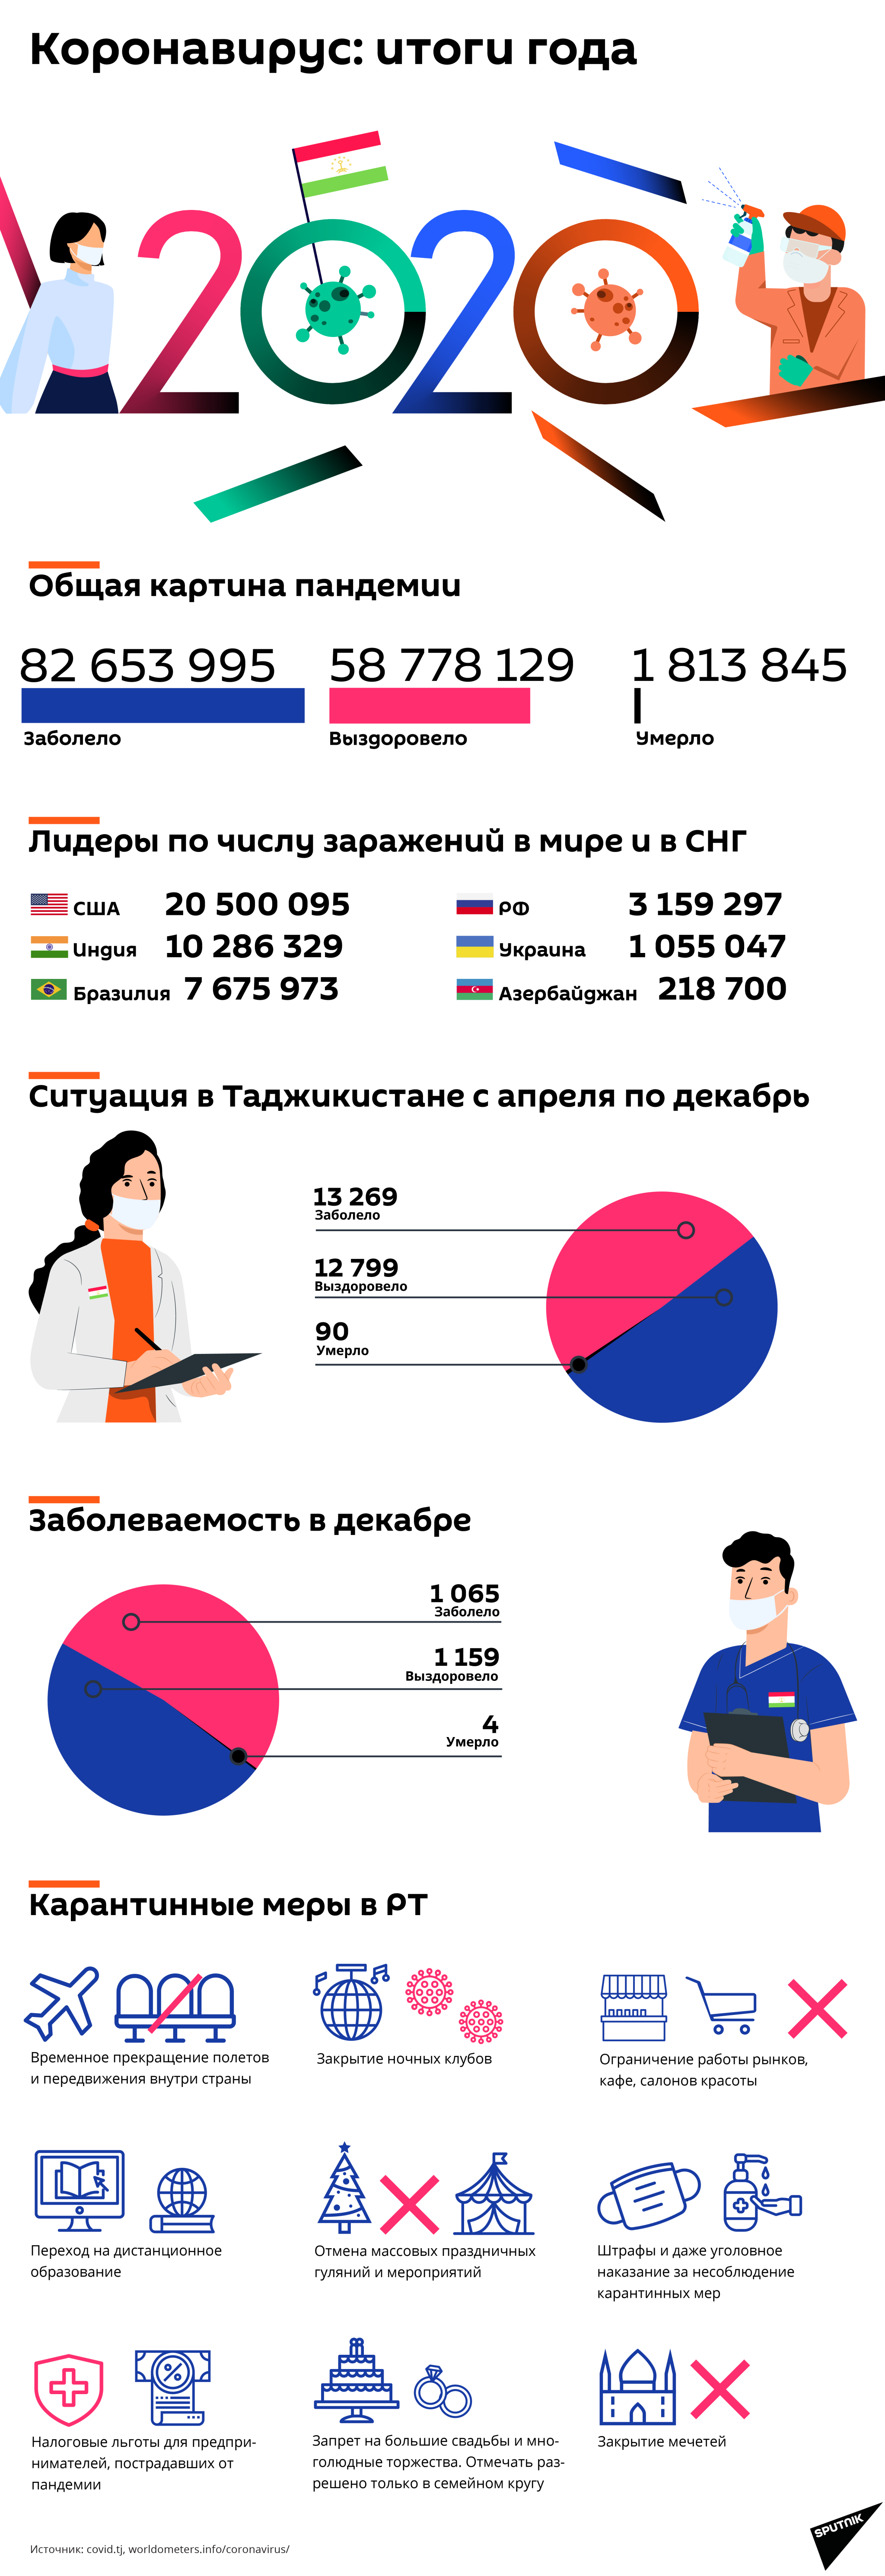 Коронавирус: итоги года - Sputnik Таджикистан